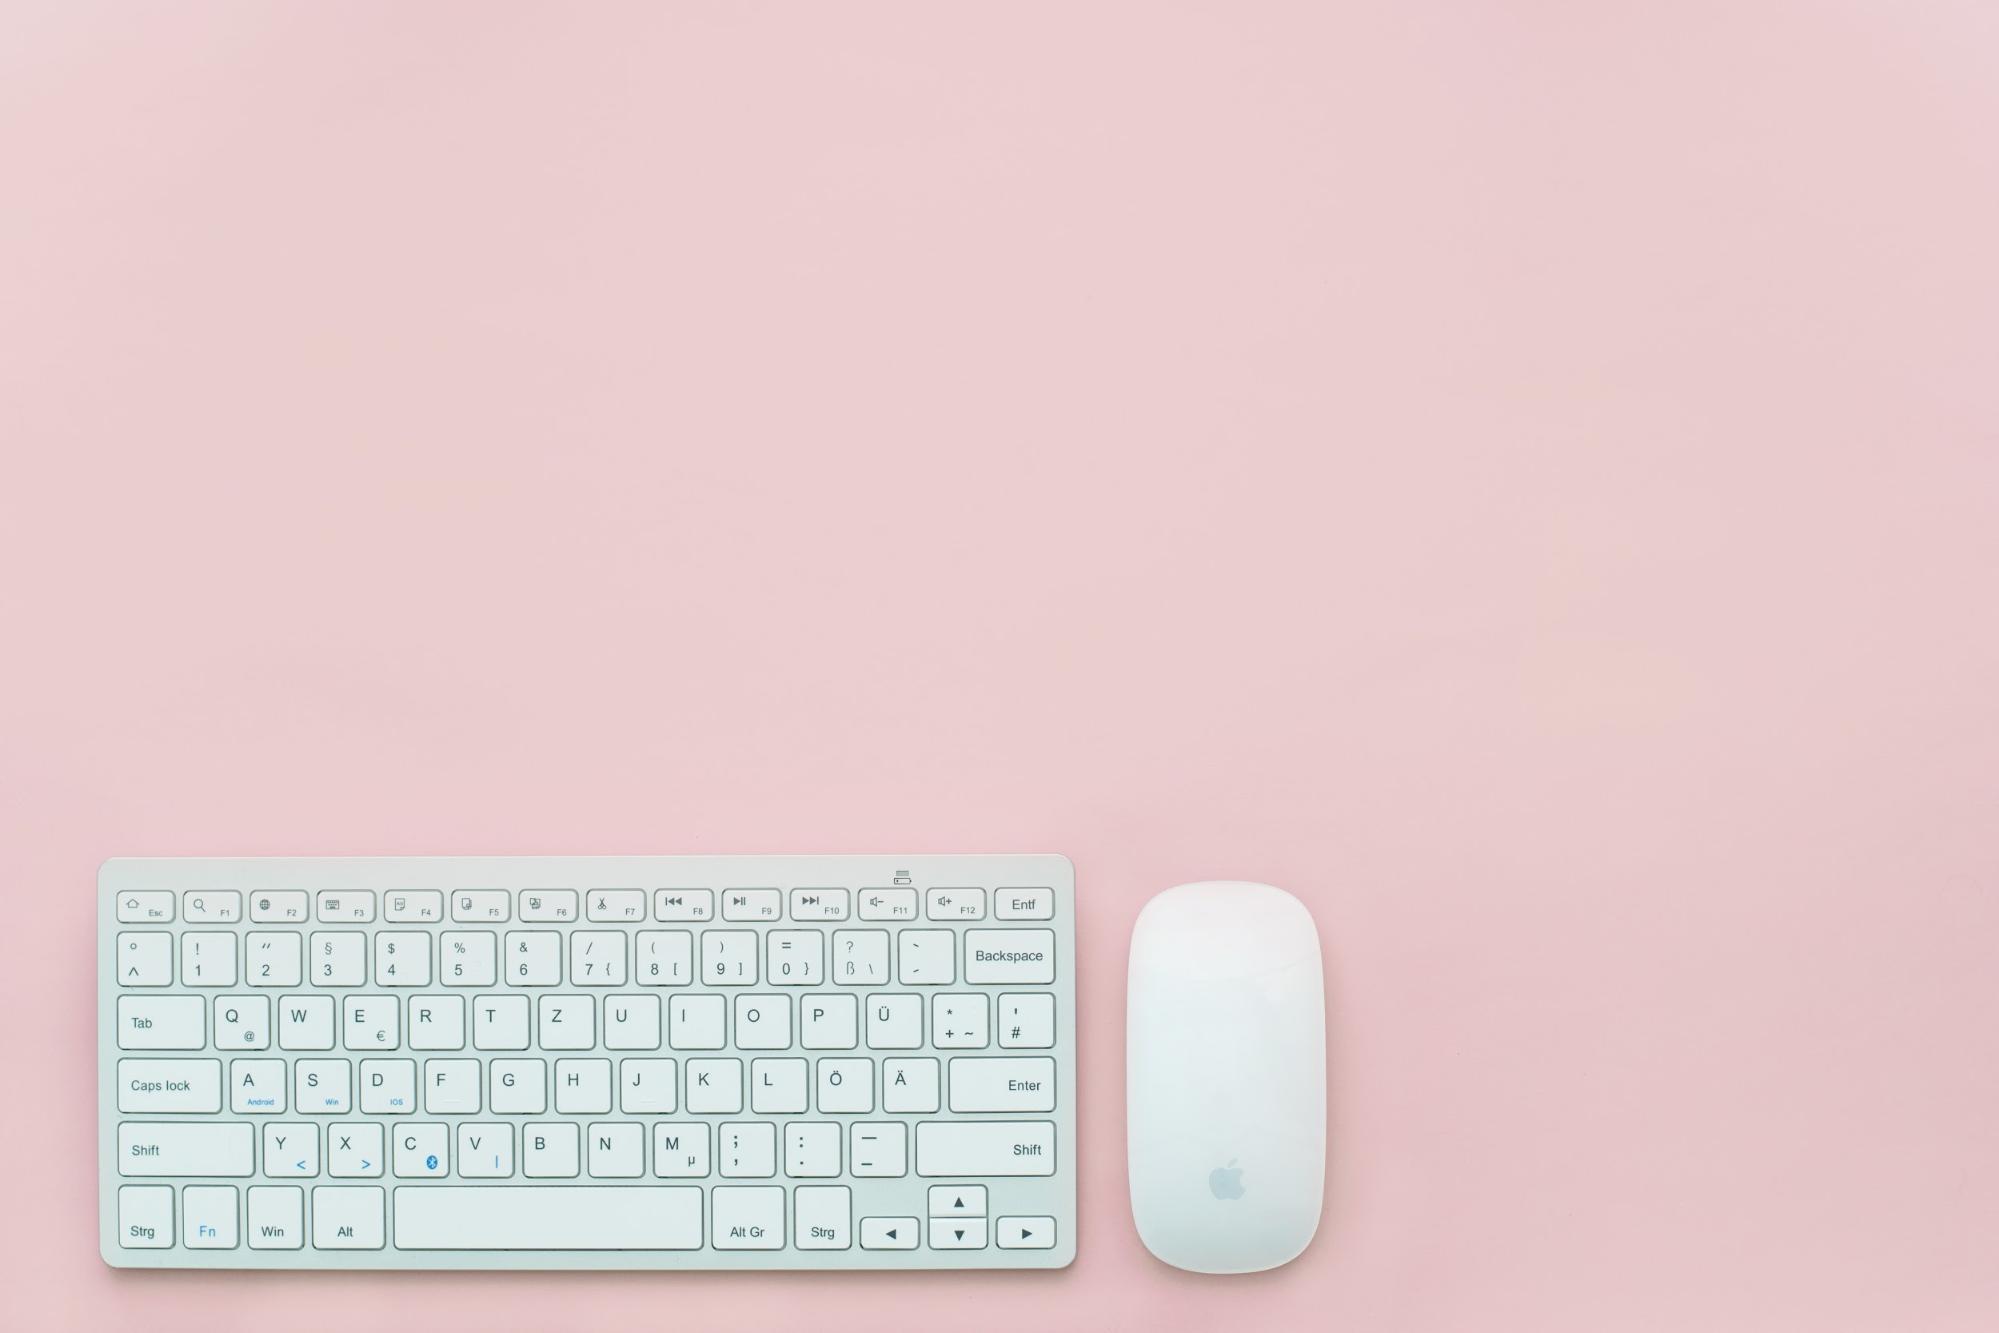 keyboard on pink background.jpg